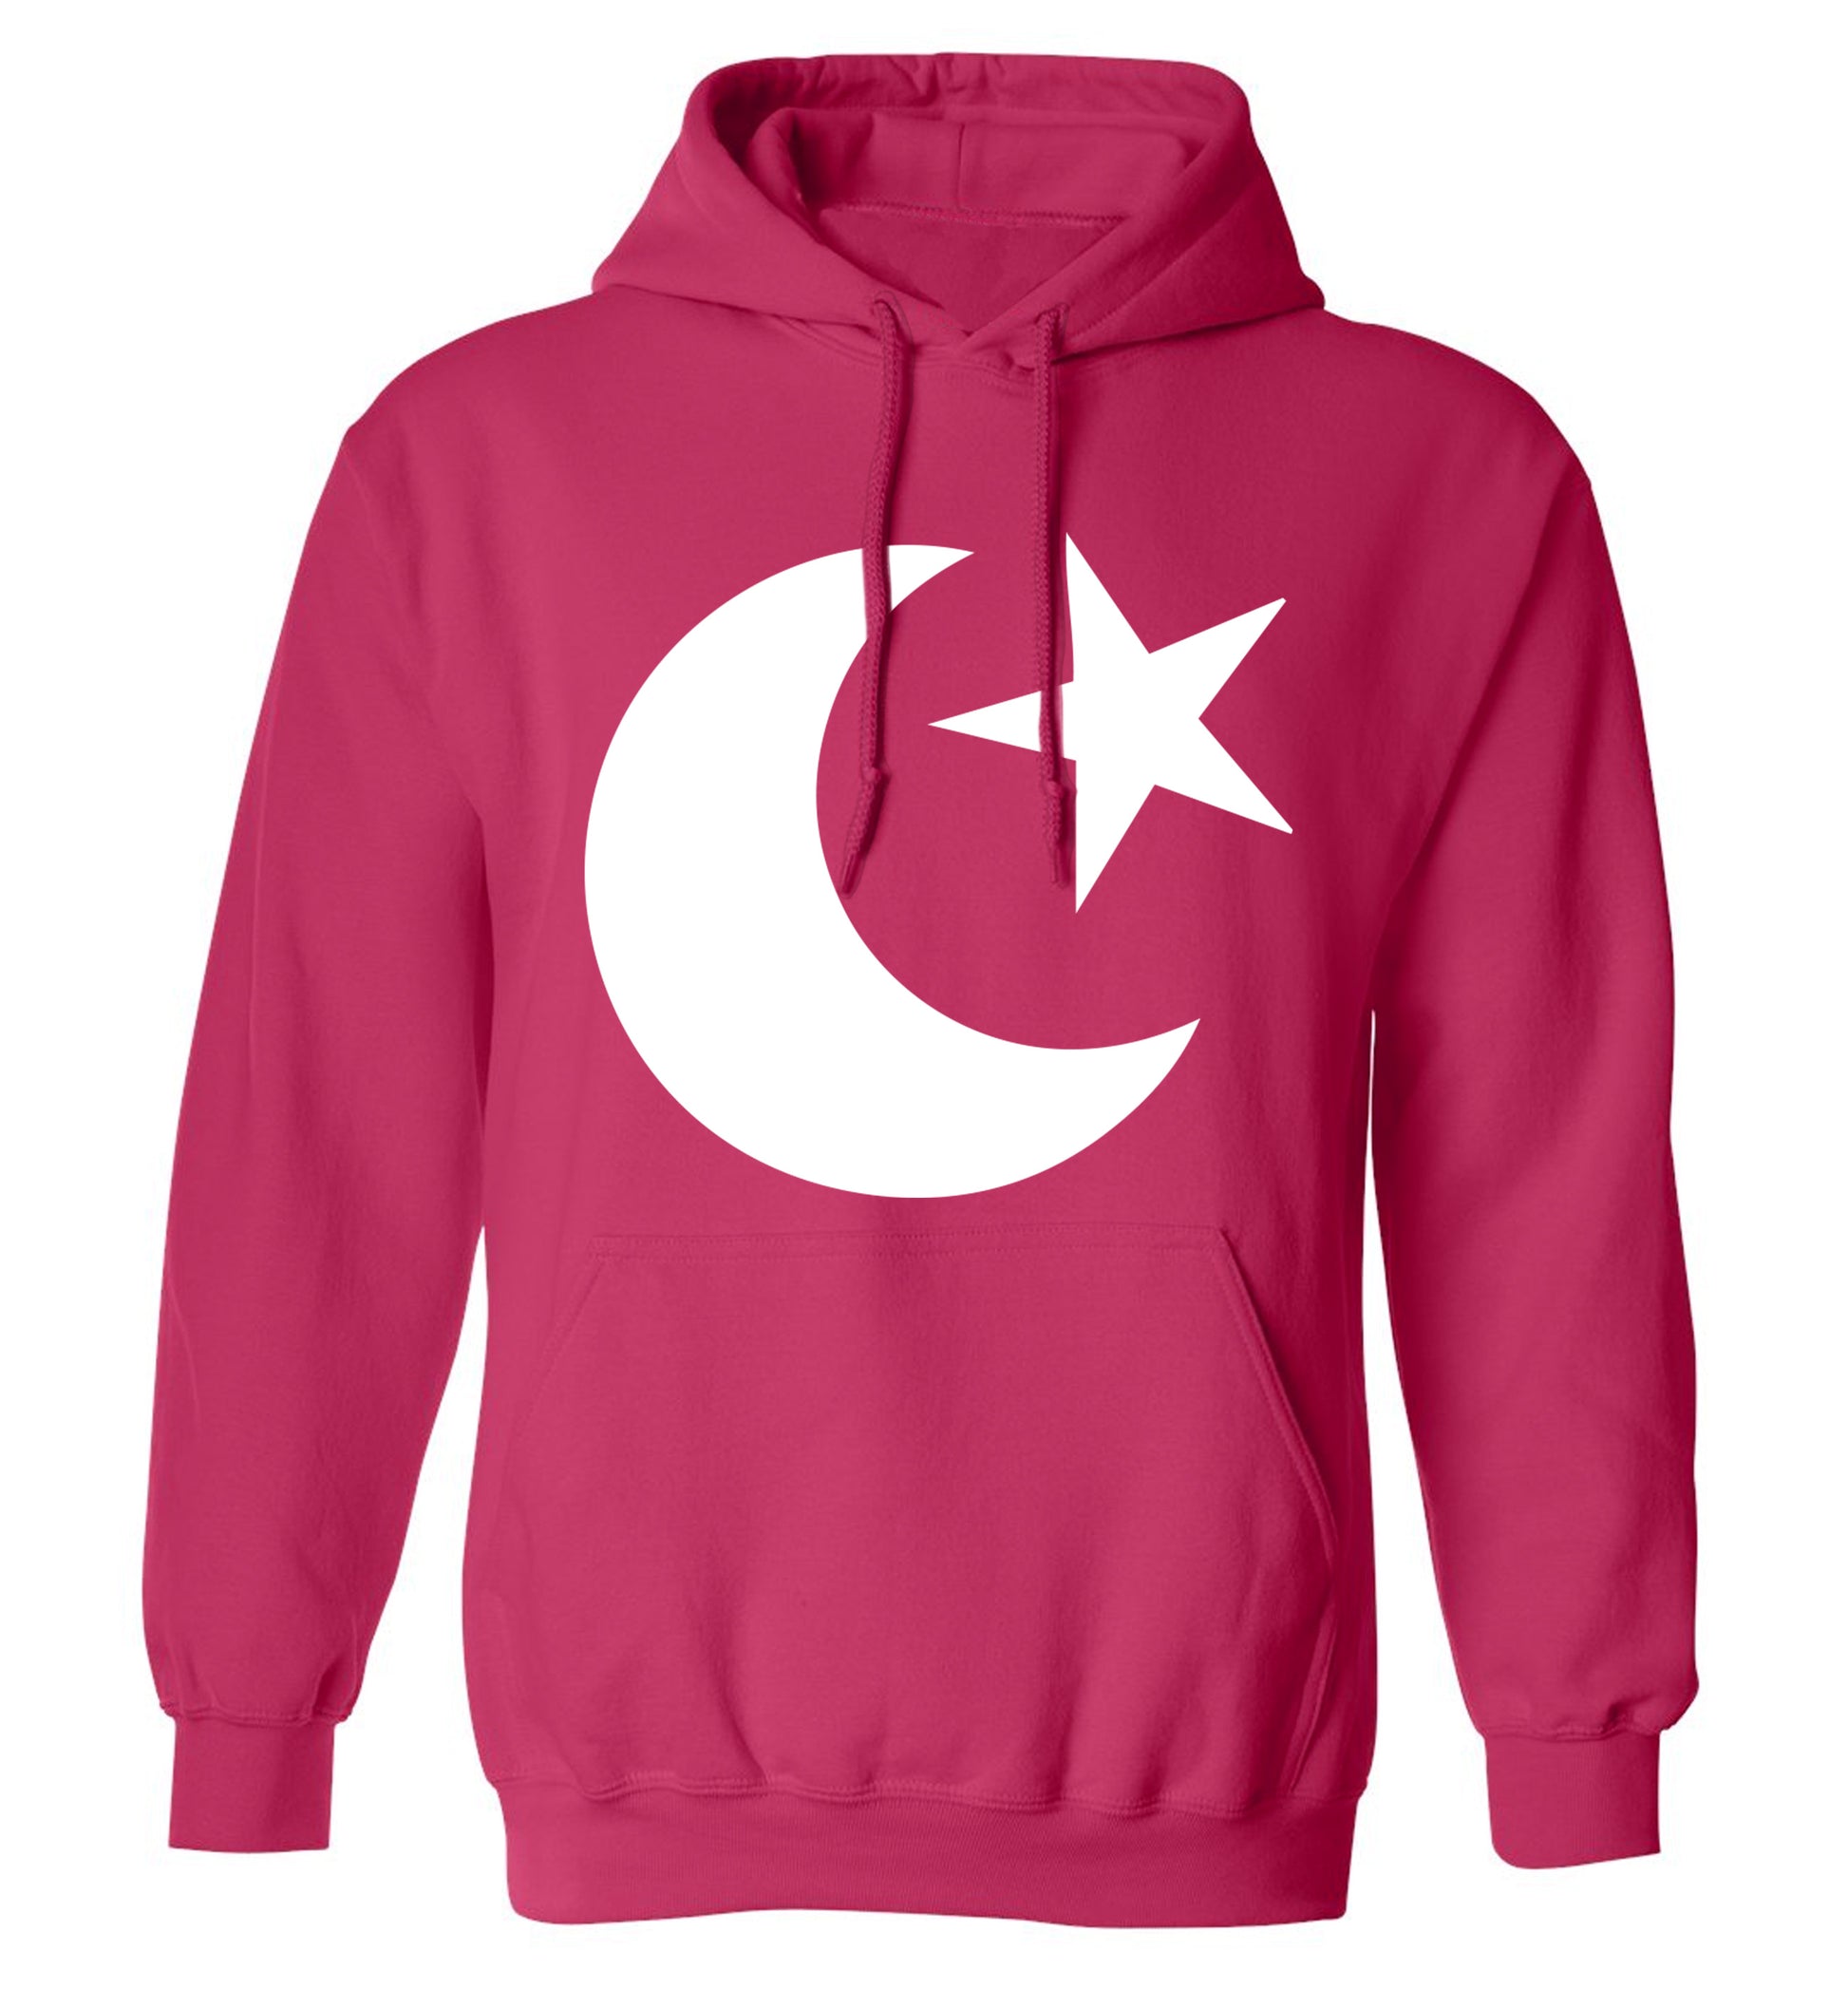 Eid symbol adults unisex pink hoodie 2XL